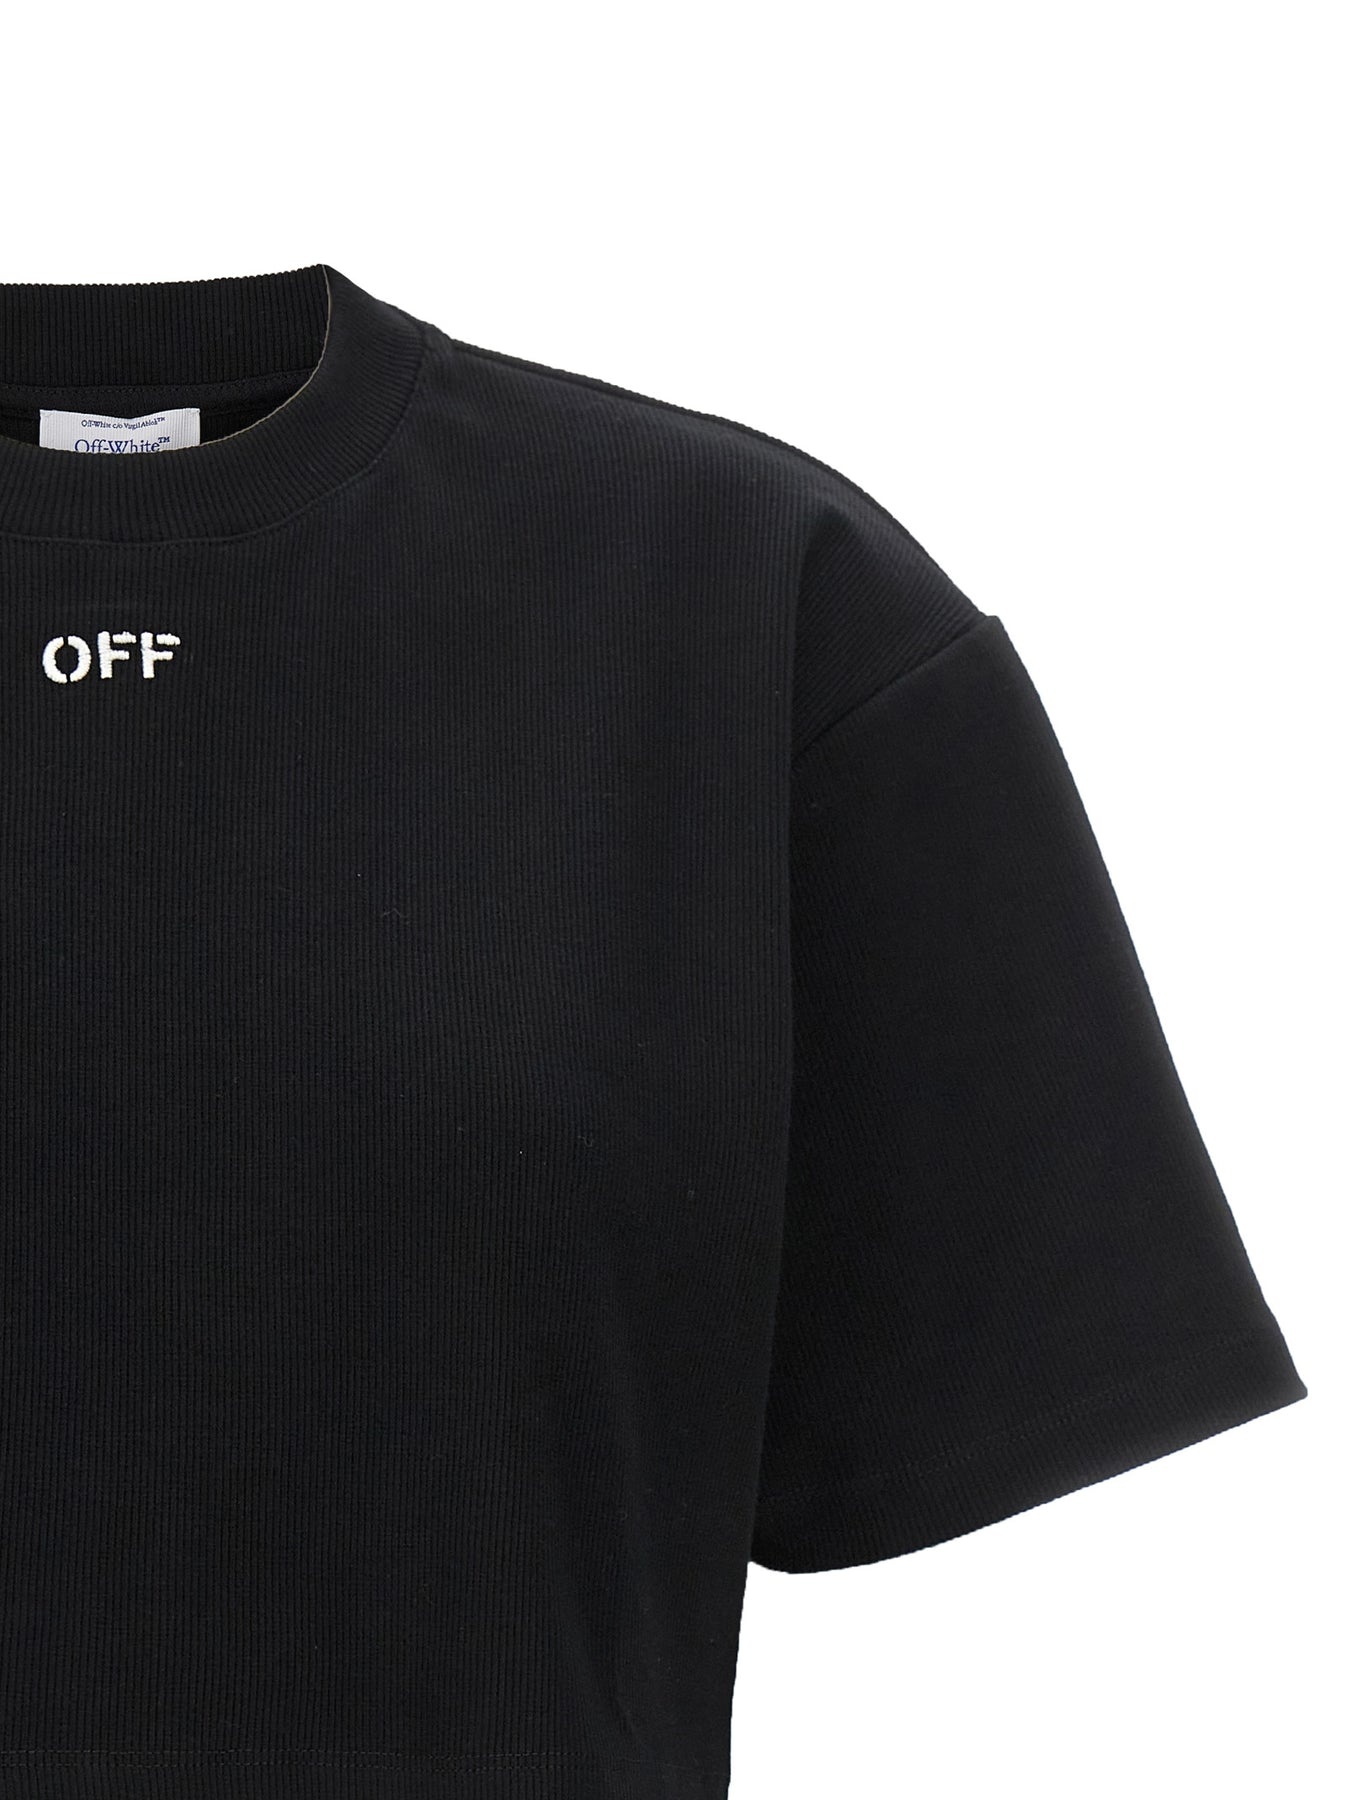 Off Stamp T-Shirt Black - 3